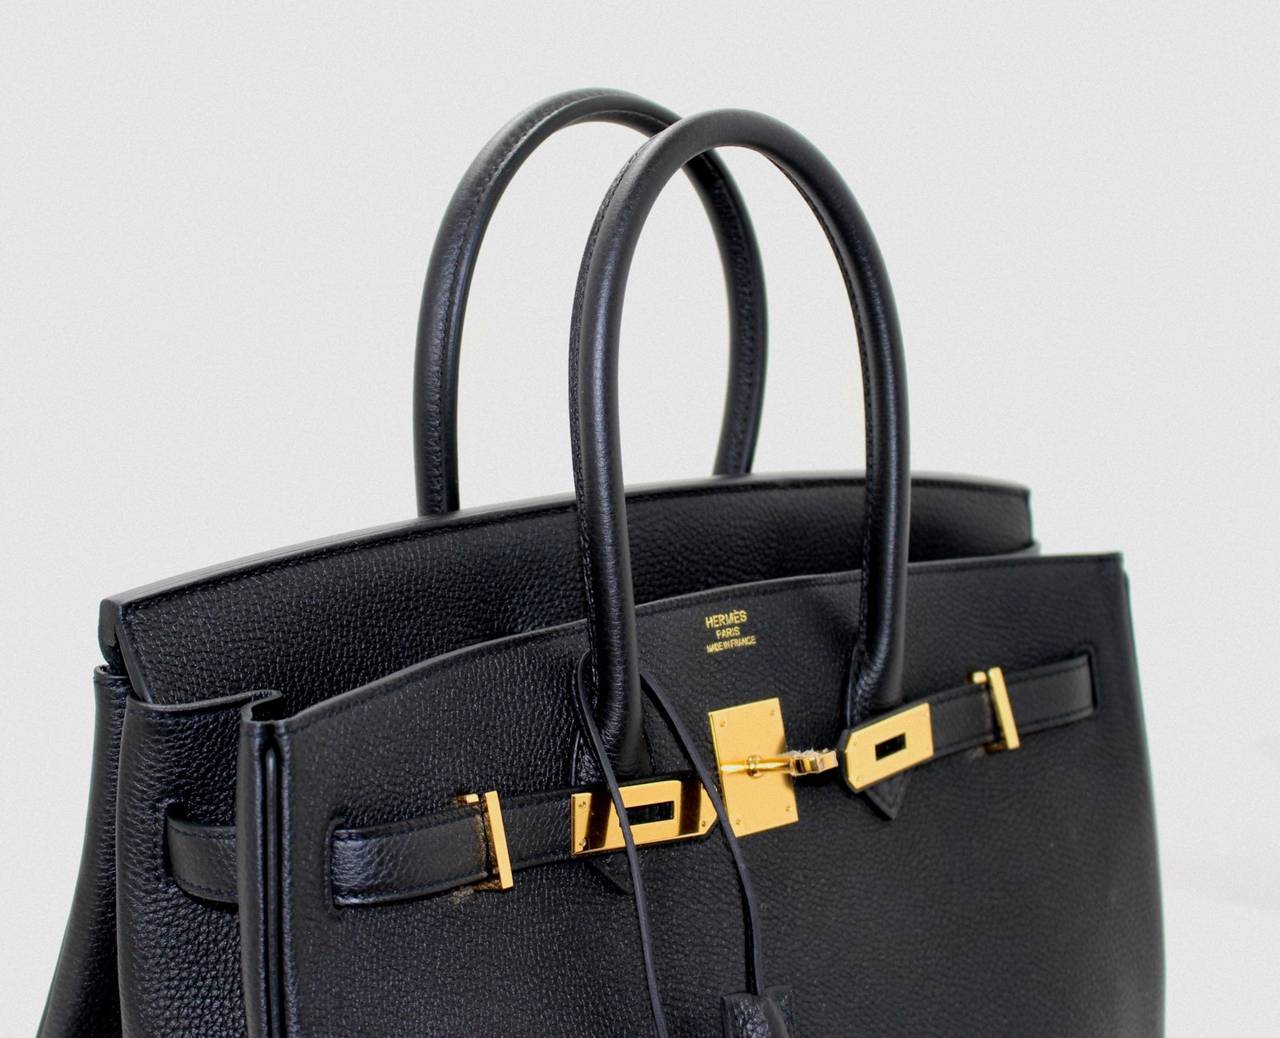 hermes purses - Hermes Birkin in Black Togo Leather with Gold Hardware, 35 cm size ...